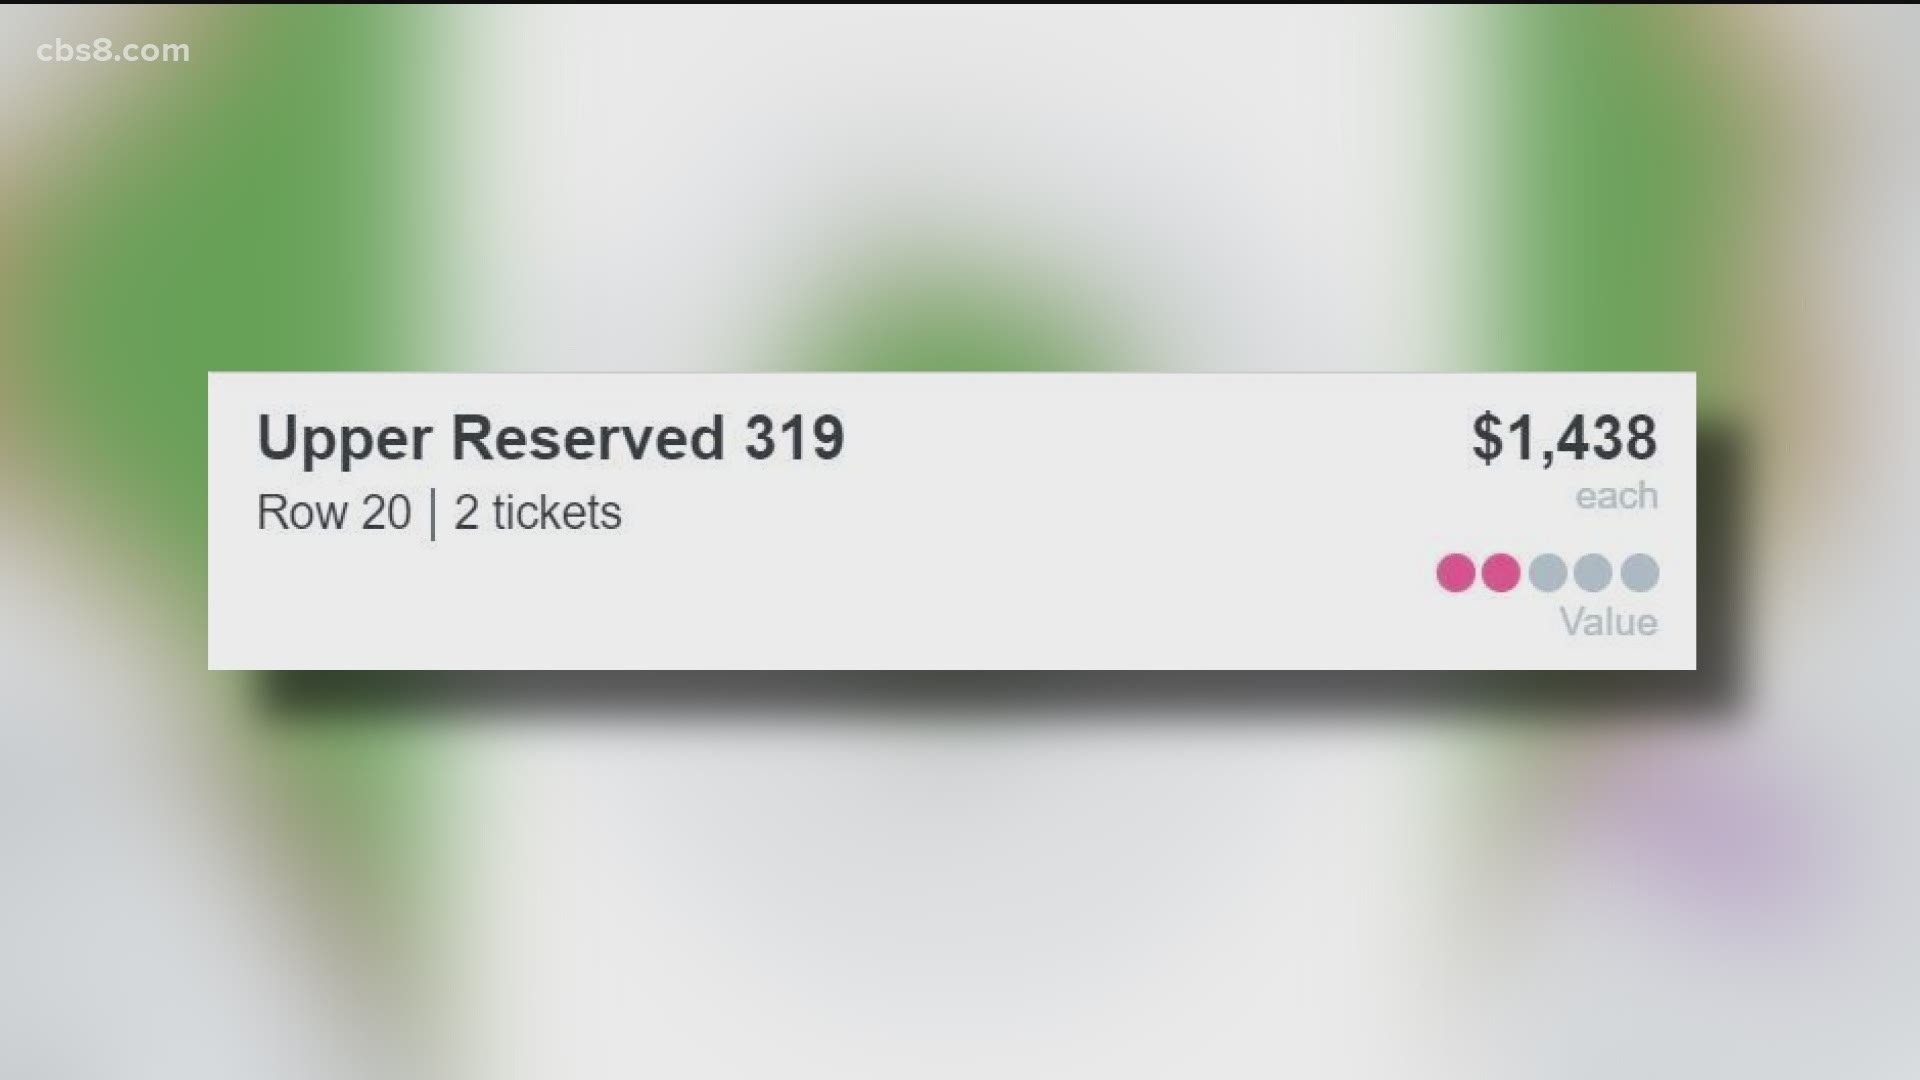 Nosebleed seats will run you almost $1,500.